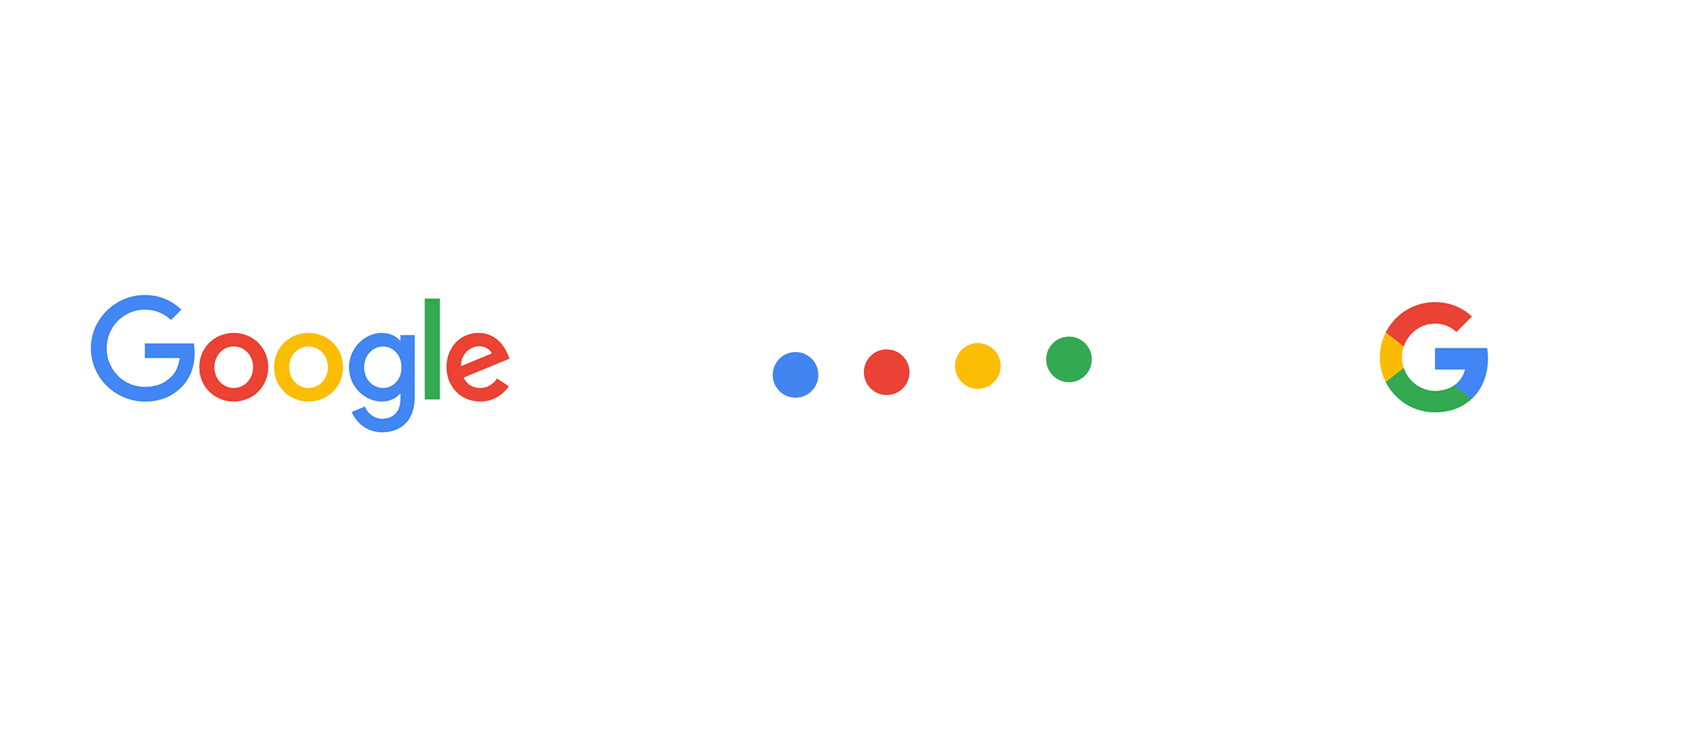 Google G Logo - Evolving the Google Identity